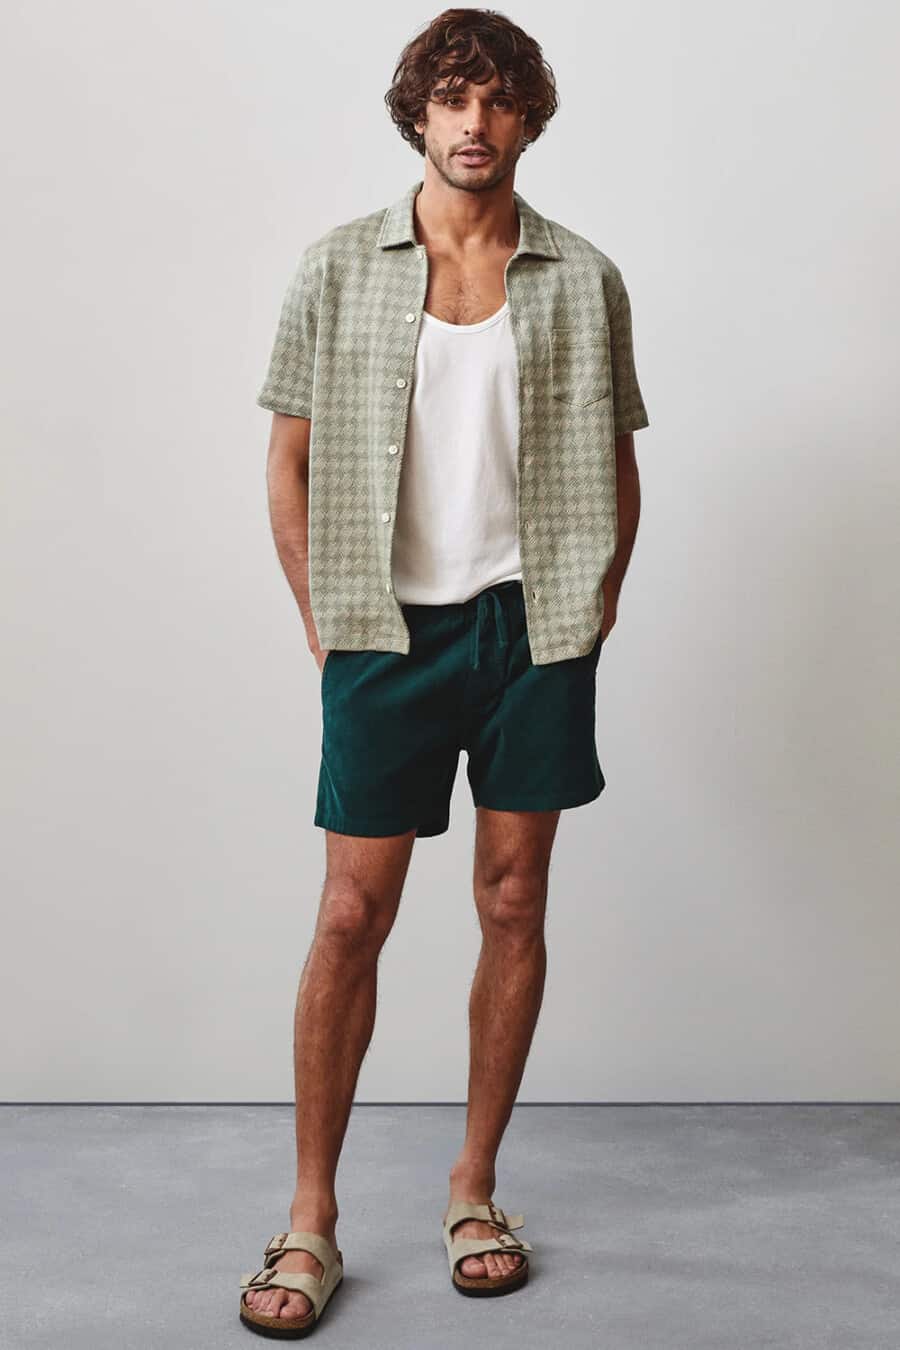 Men's teal green shorts, white vest, light green patterned shirt and beige slider sandals outfit